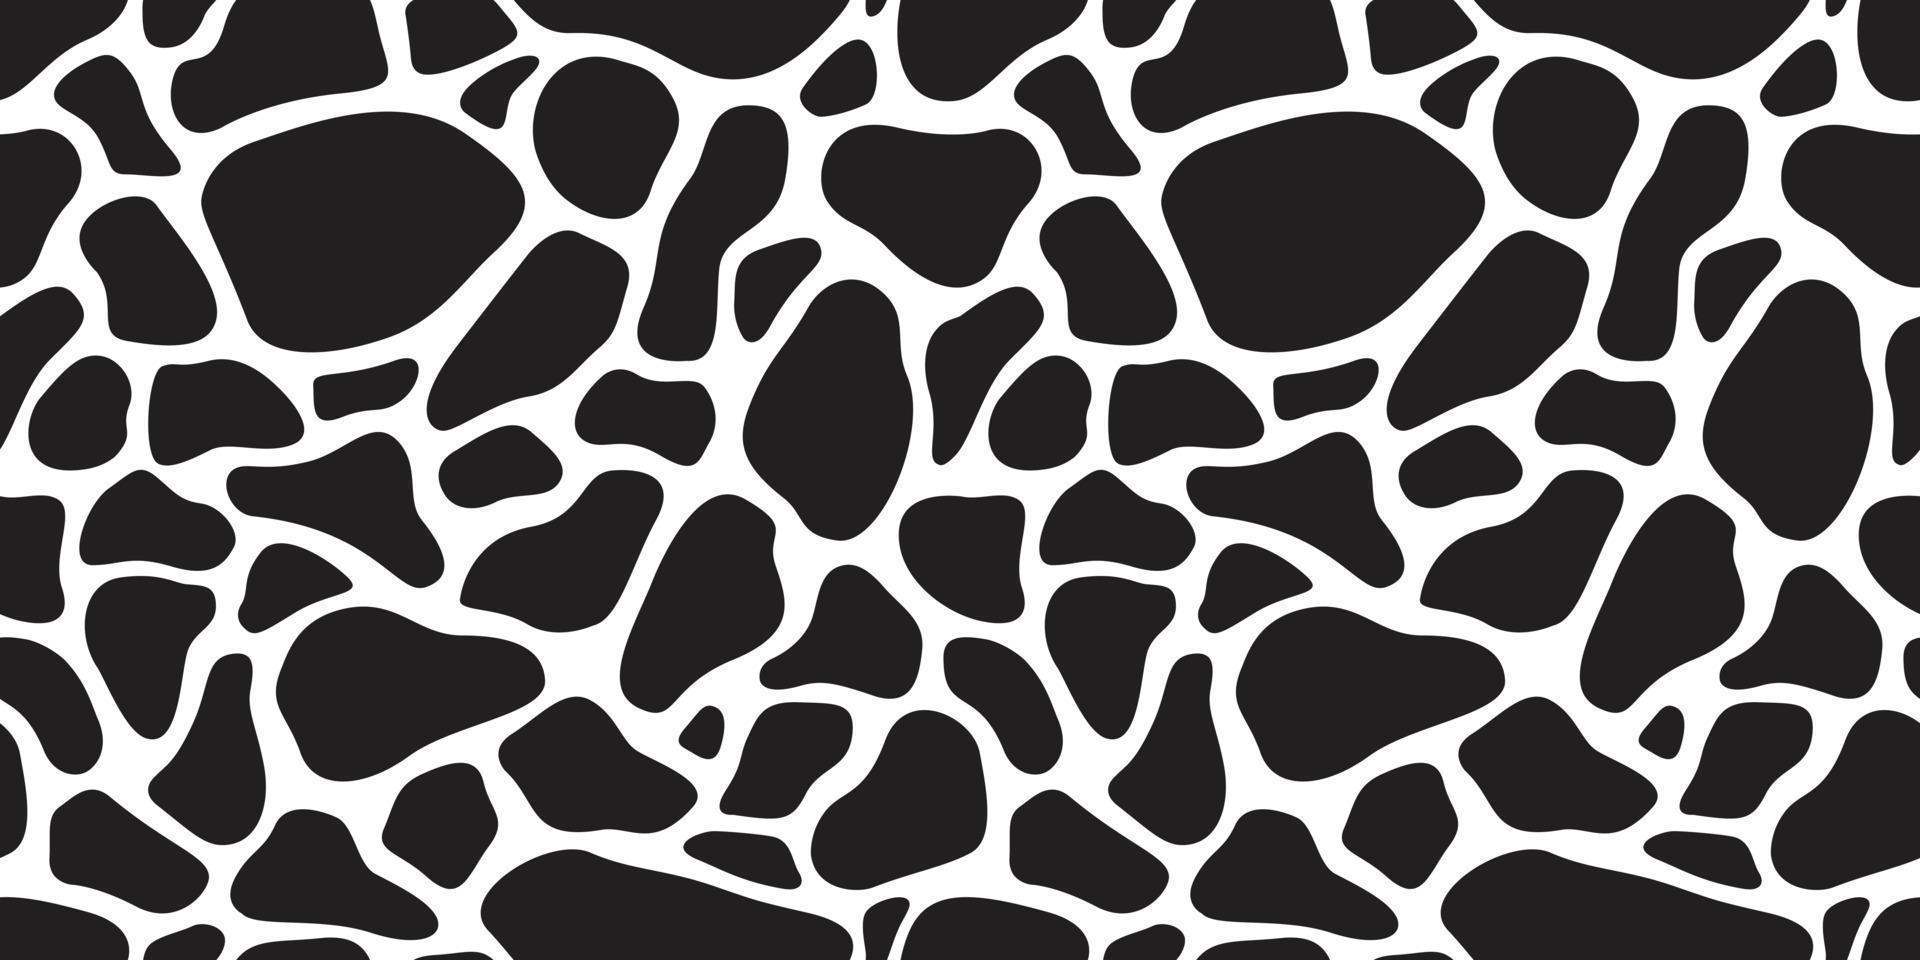 Cow skin seamless pattern Dalmatians dog isolated animal skin texture zebra giraffe wallpaper background camouflage vector